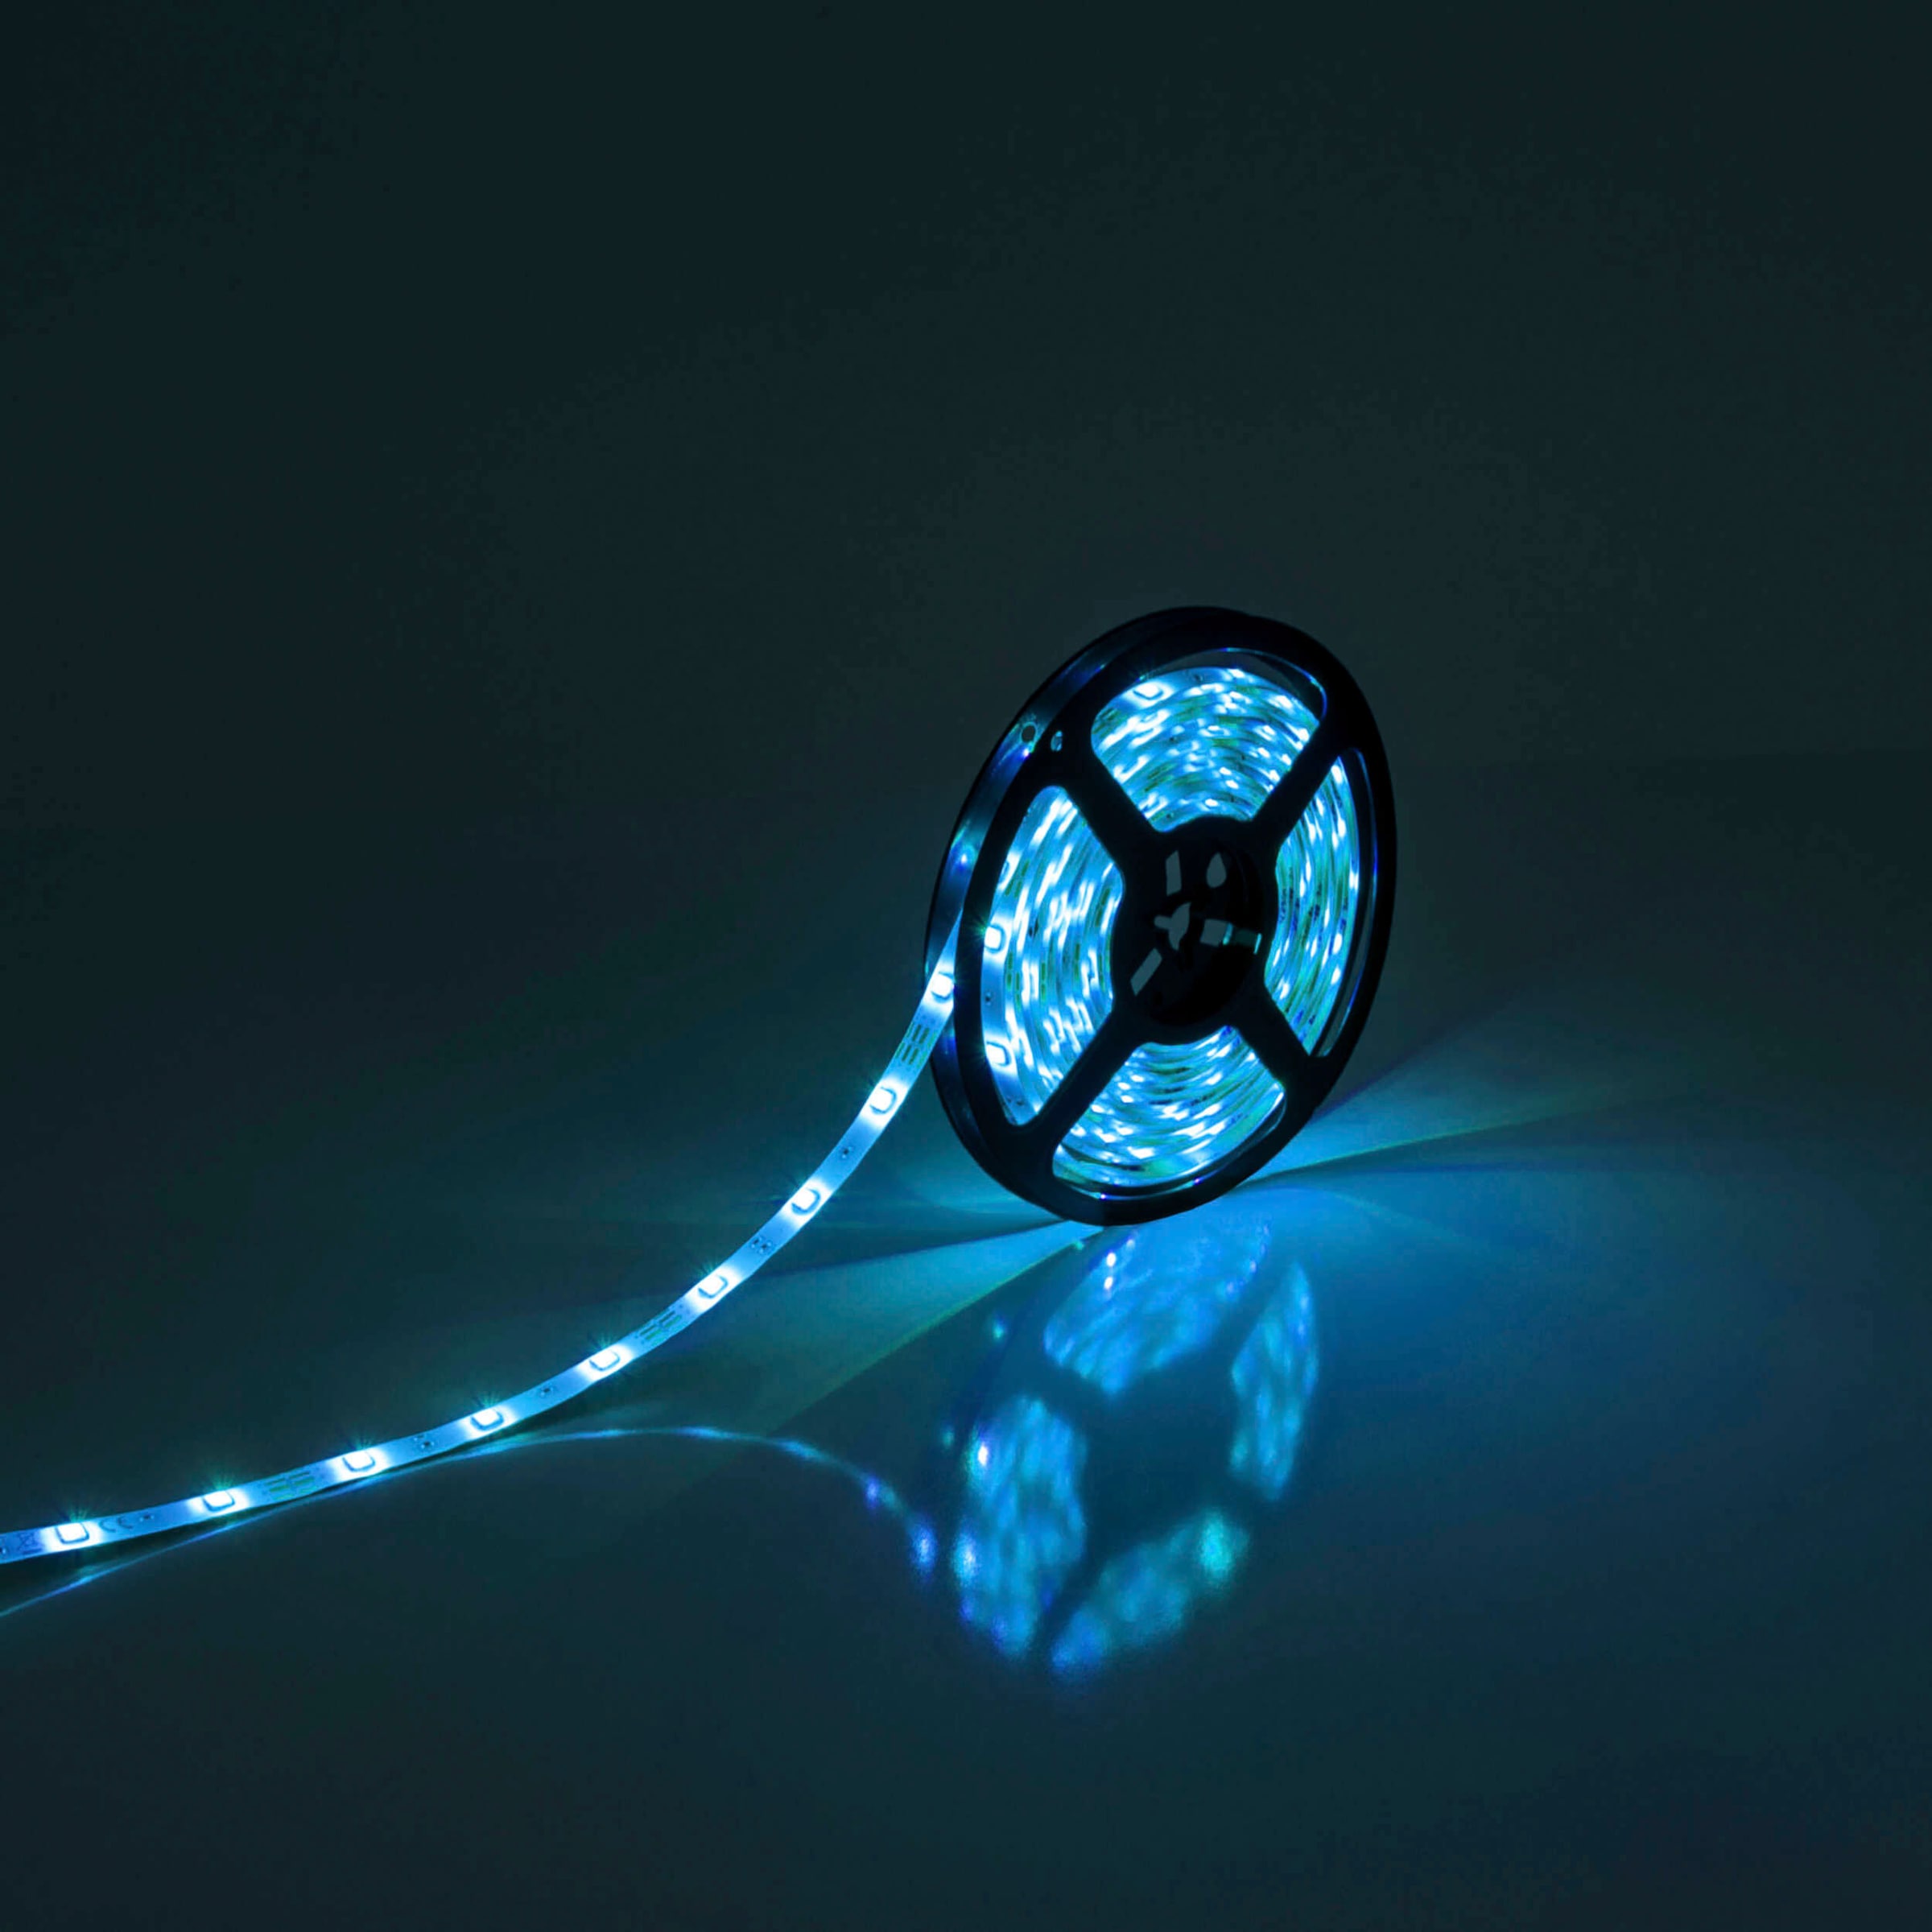 B.K.Licht LED-Streifen »USB LED Strip«, 150 St.-flammig